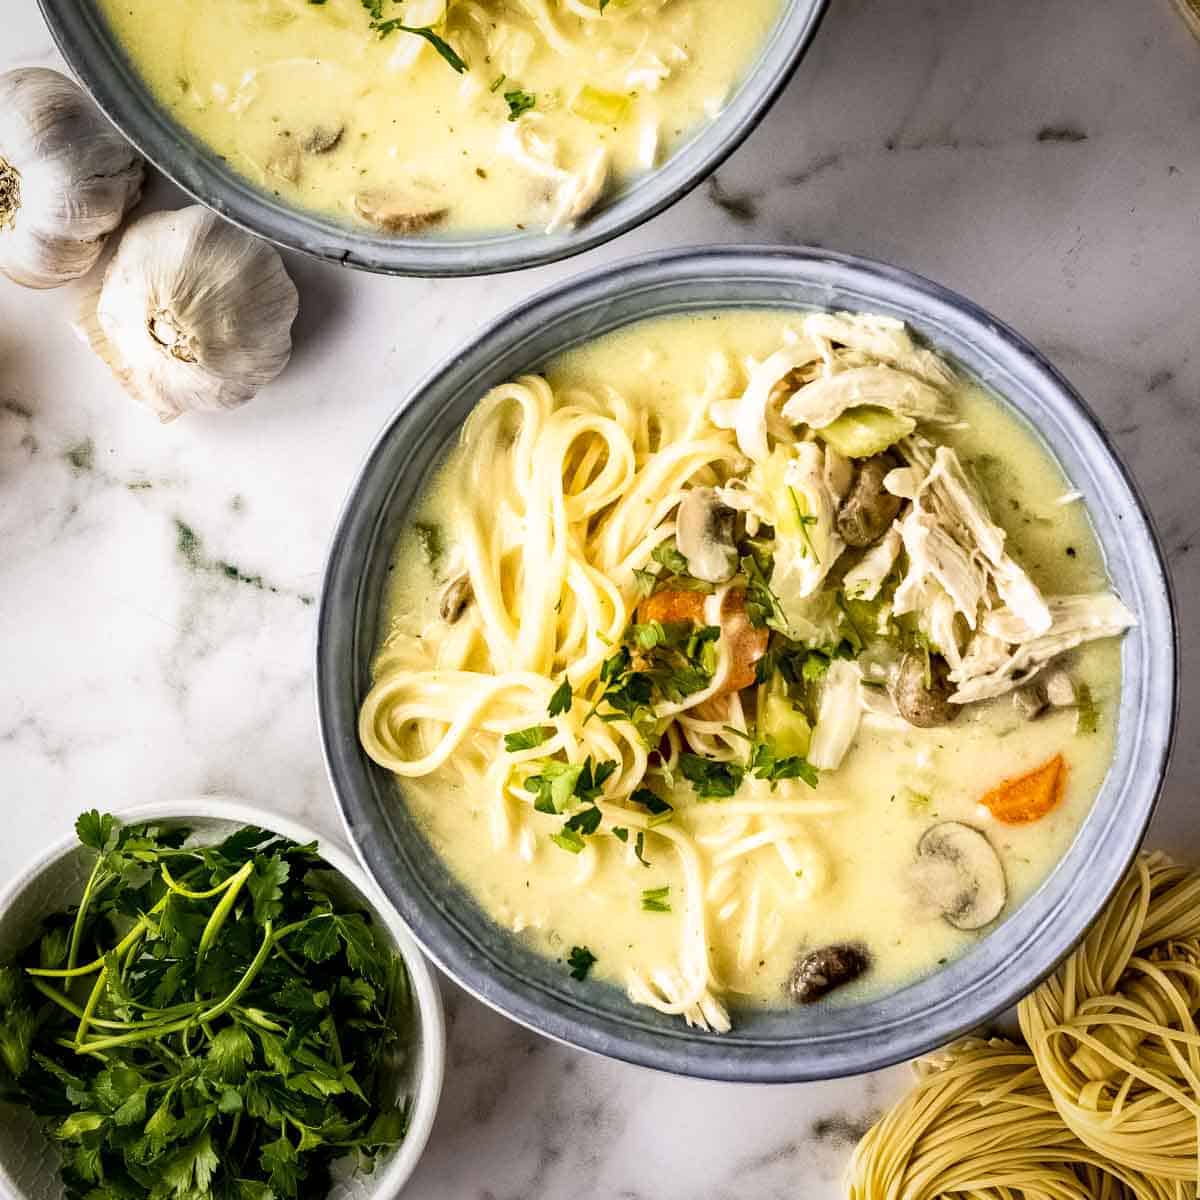 Creamy turkey soup with cilantro and noodles. 